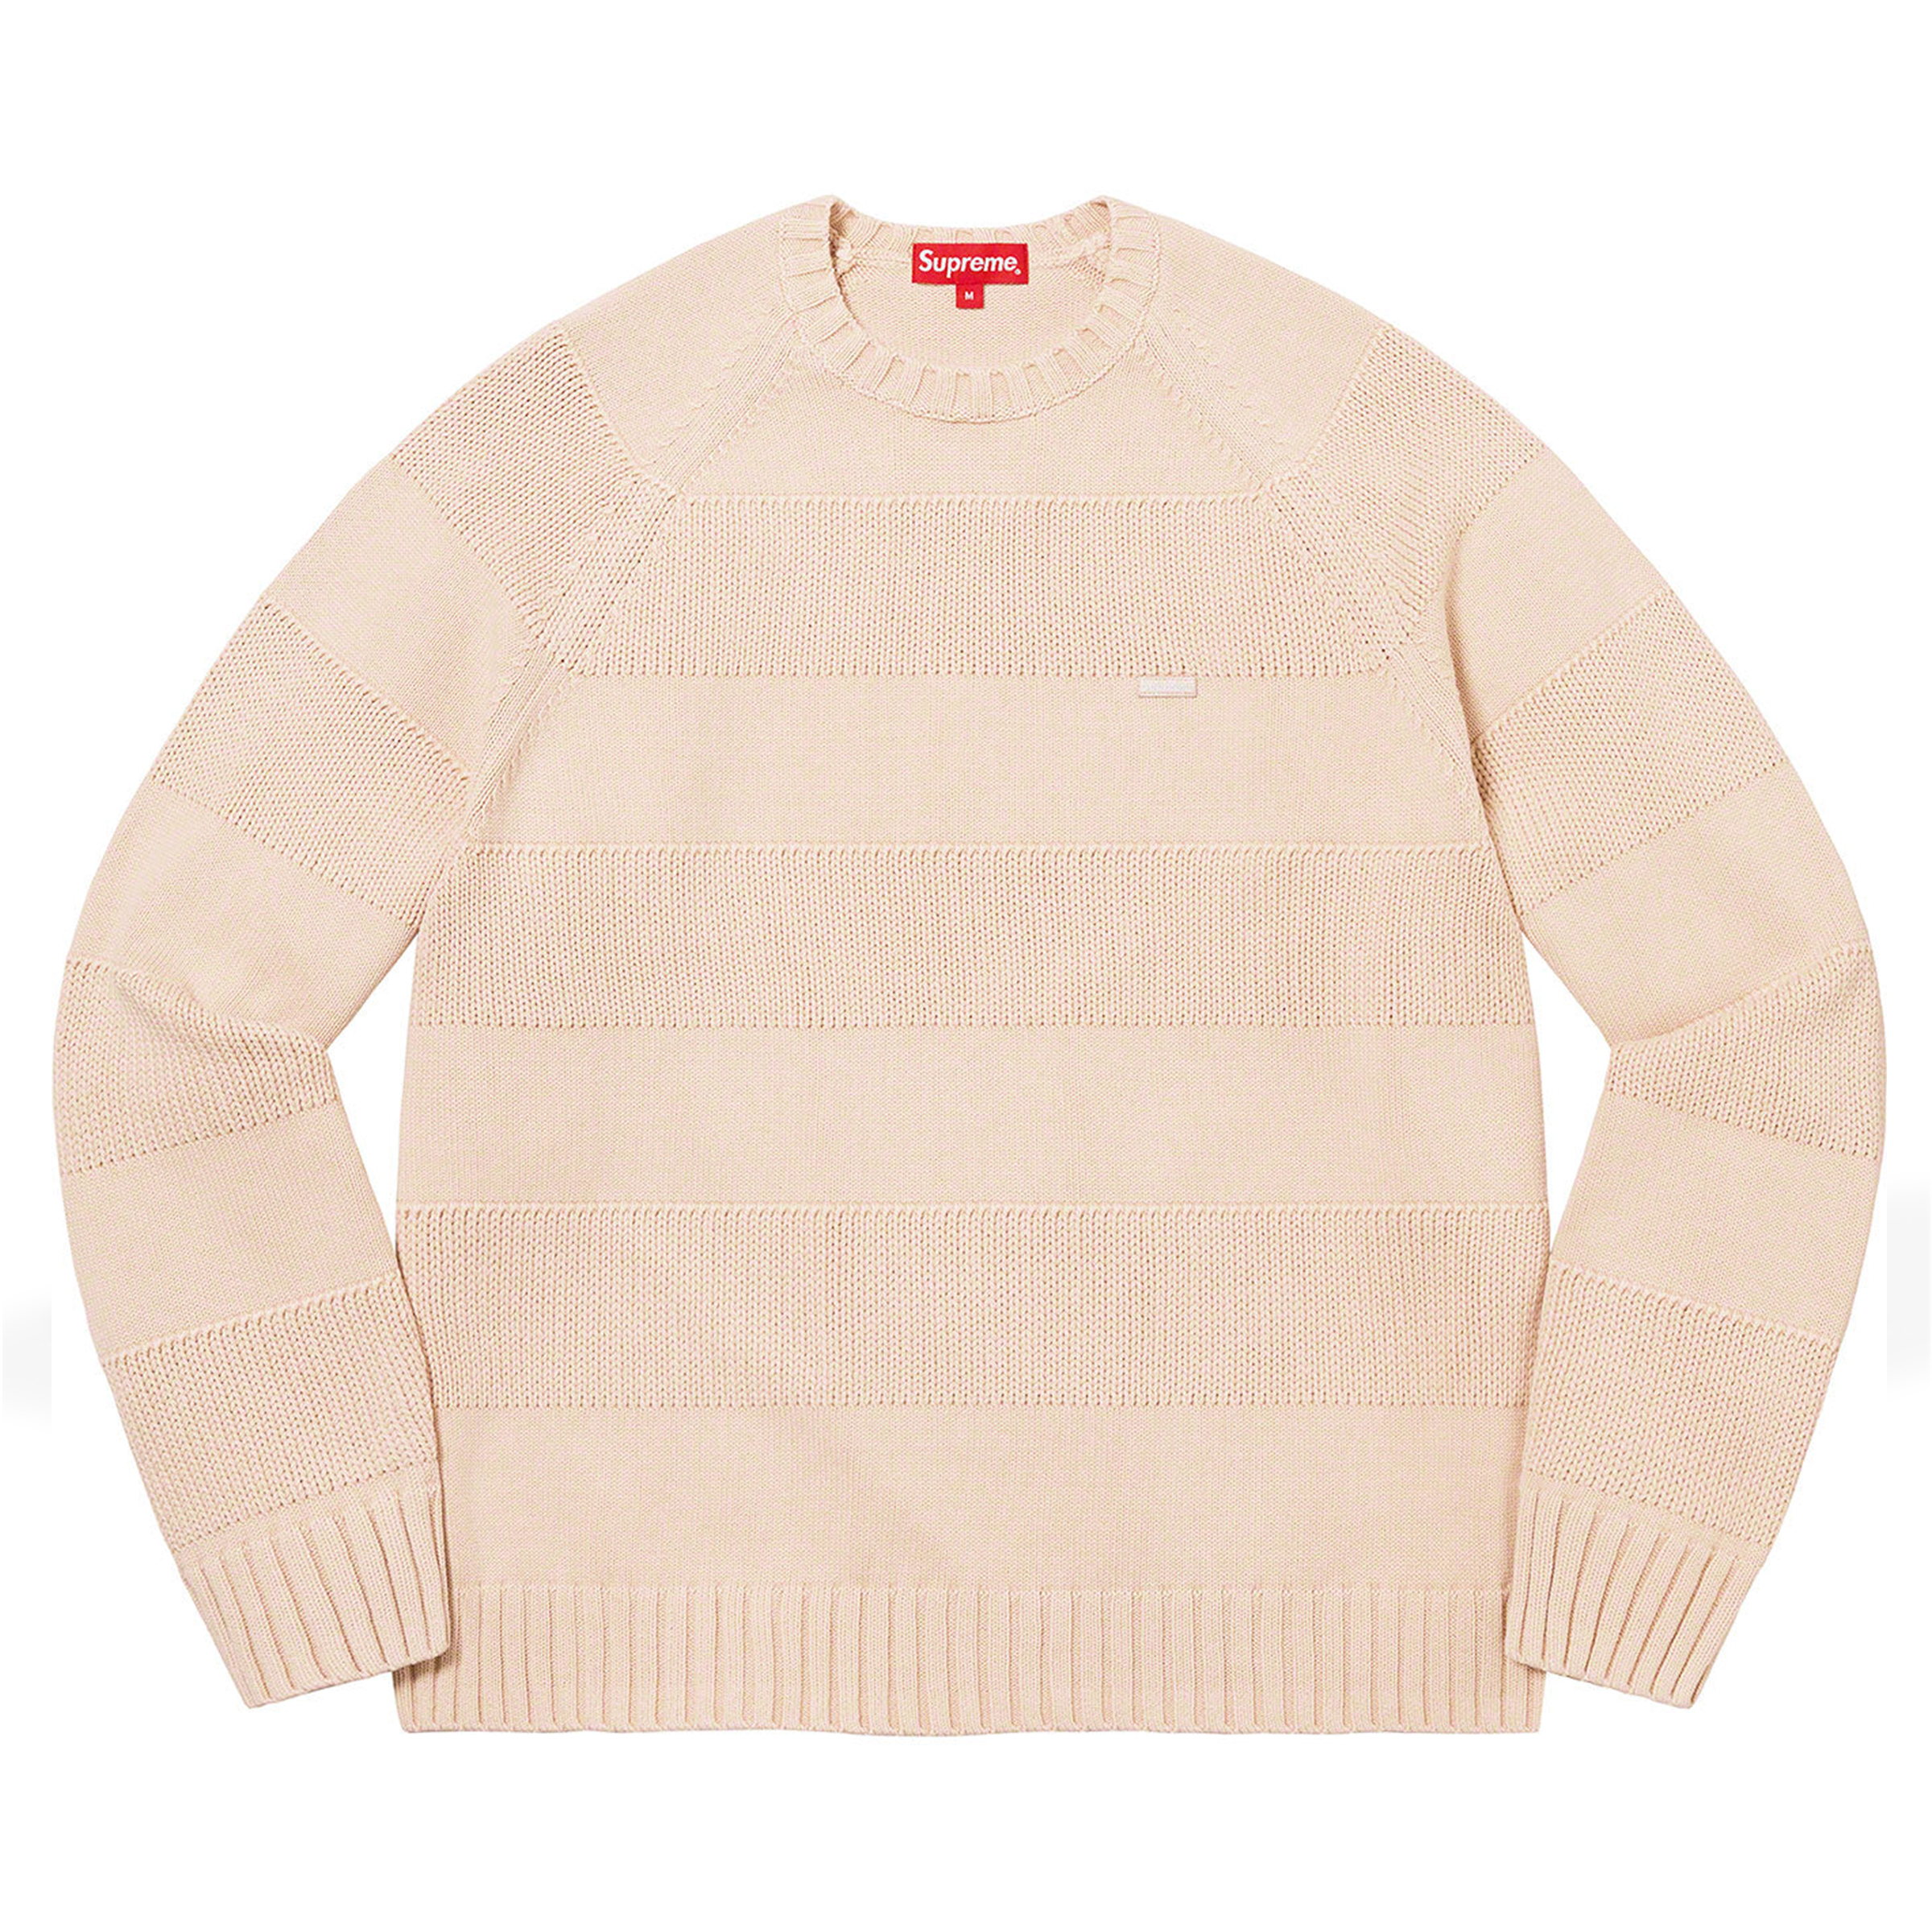 Supreme "Small Box Stripe" - Sweatshirt